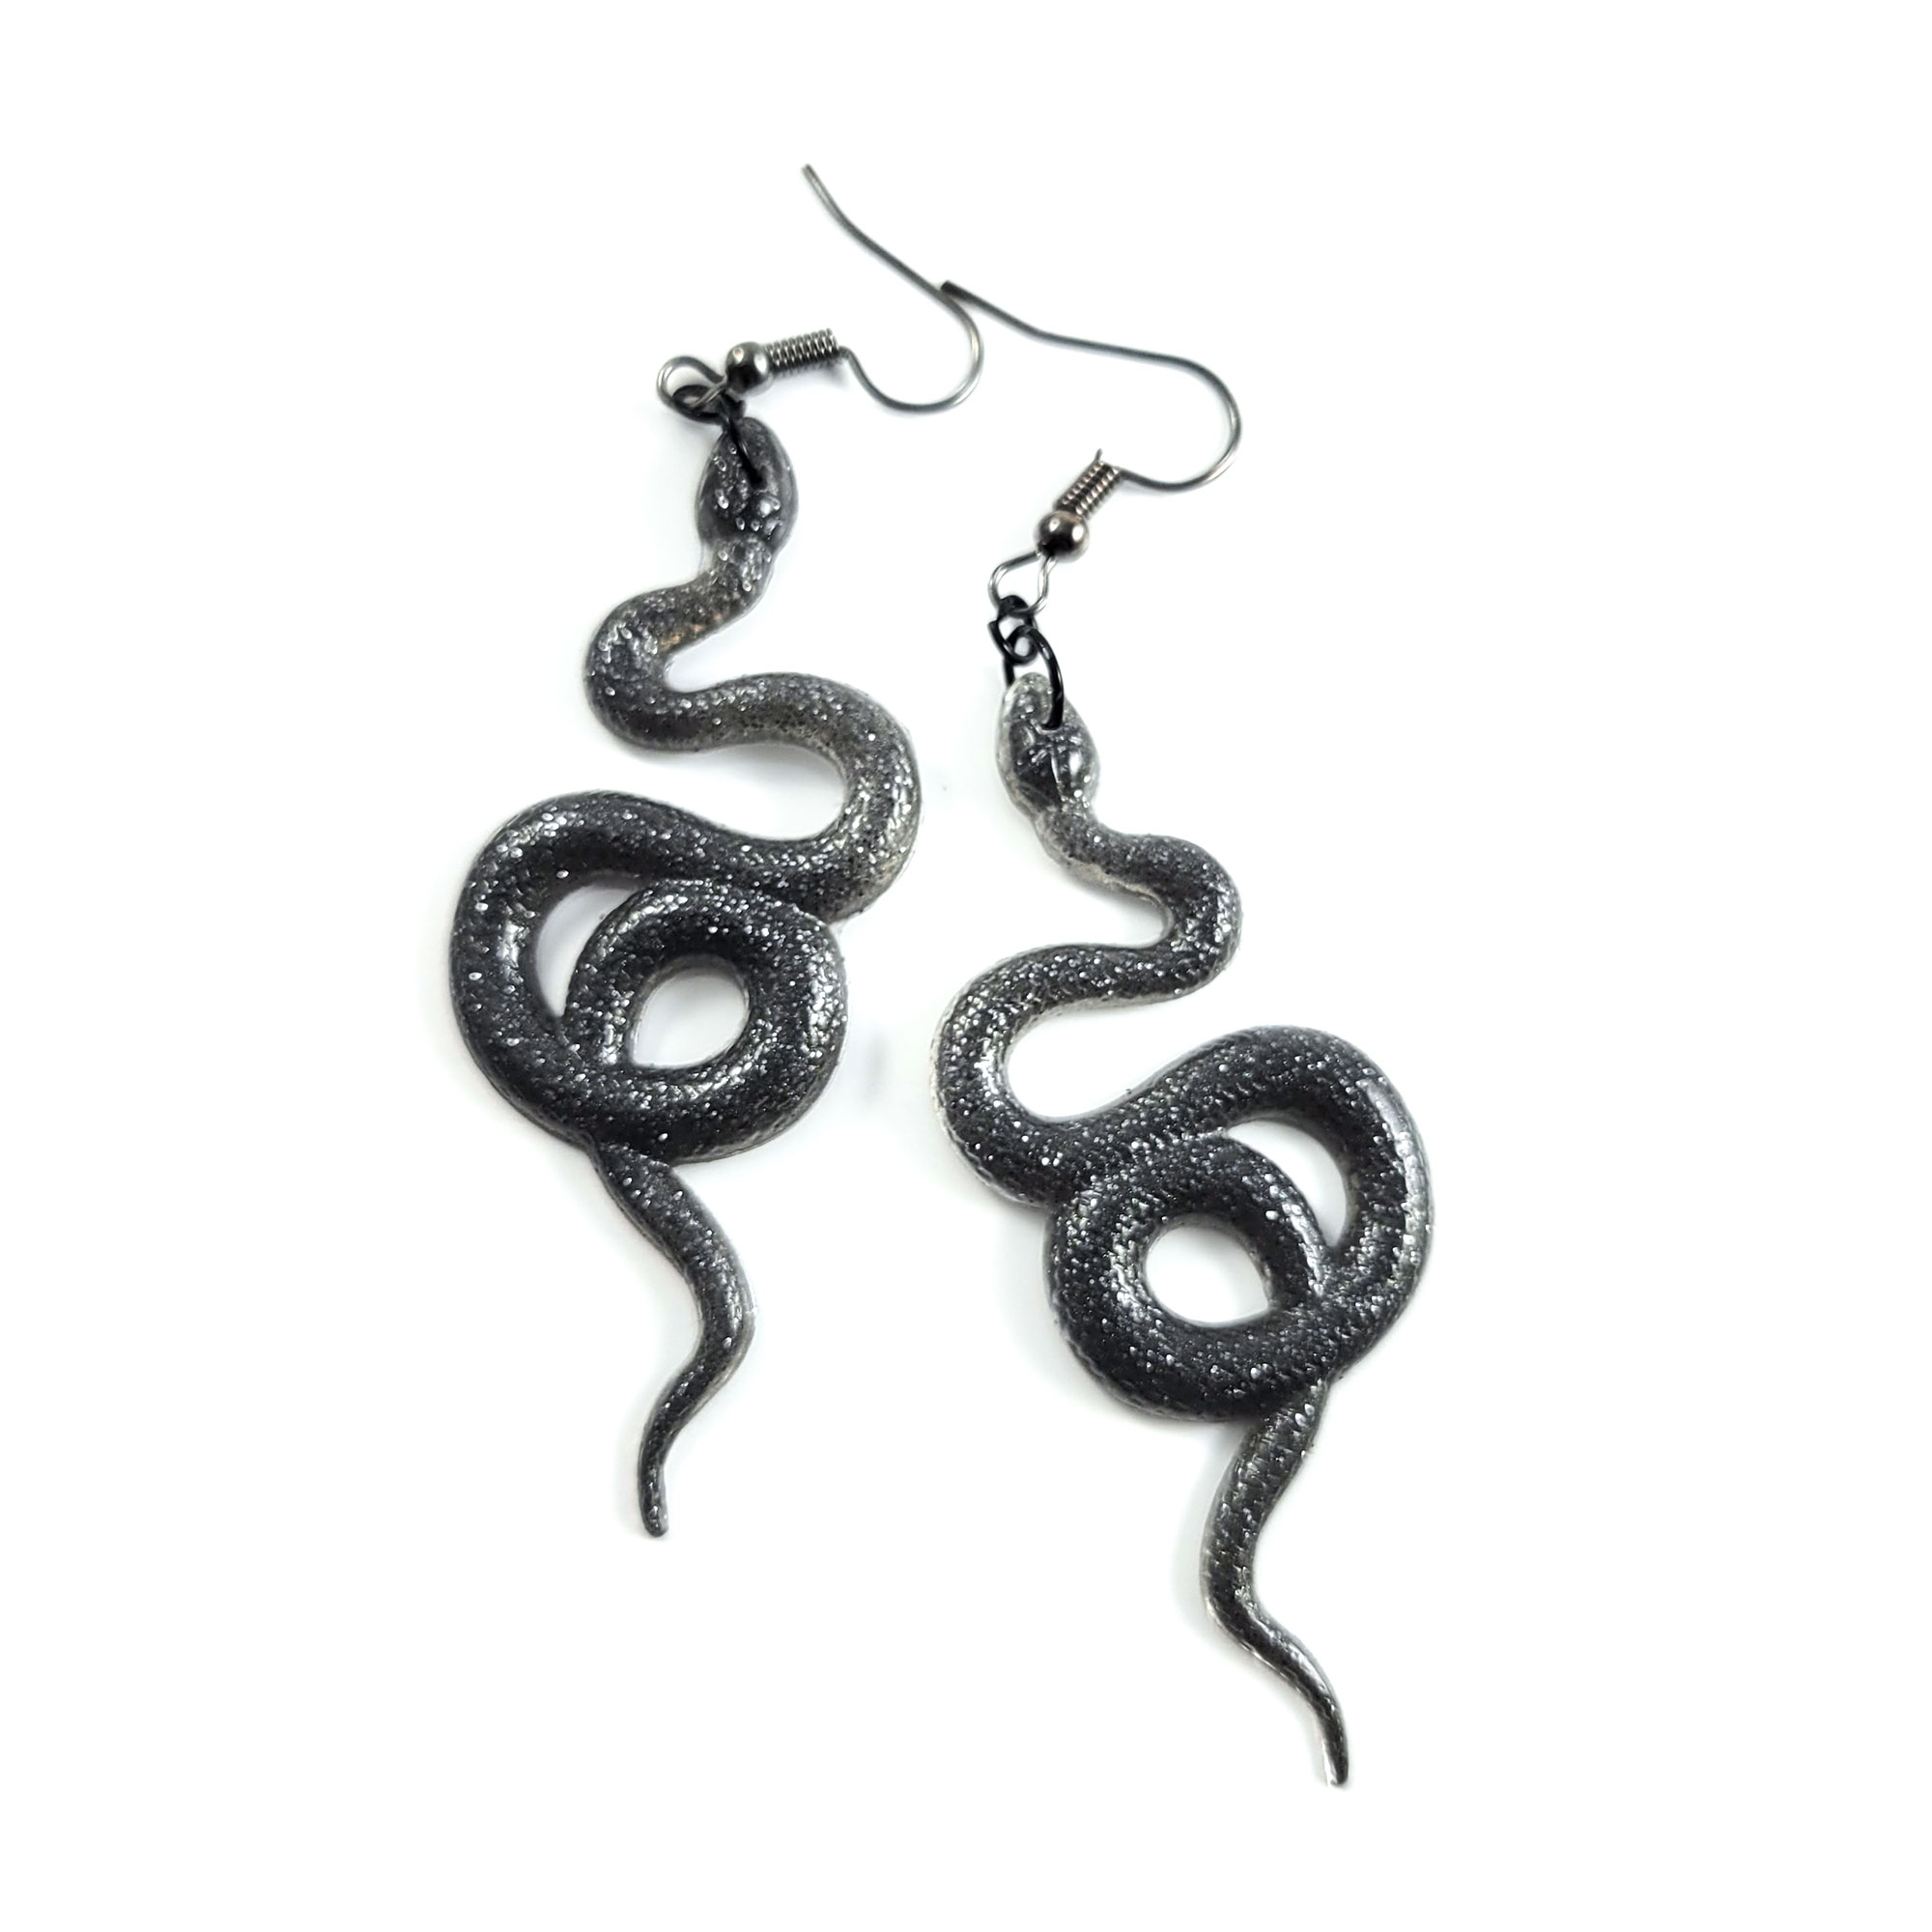 Slithery Snake Earrings by Wilde Designs